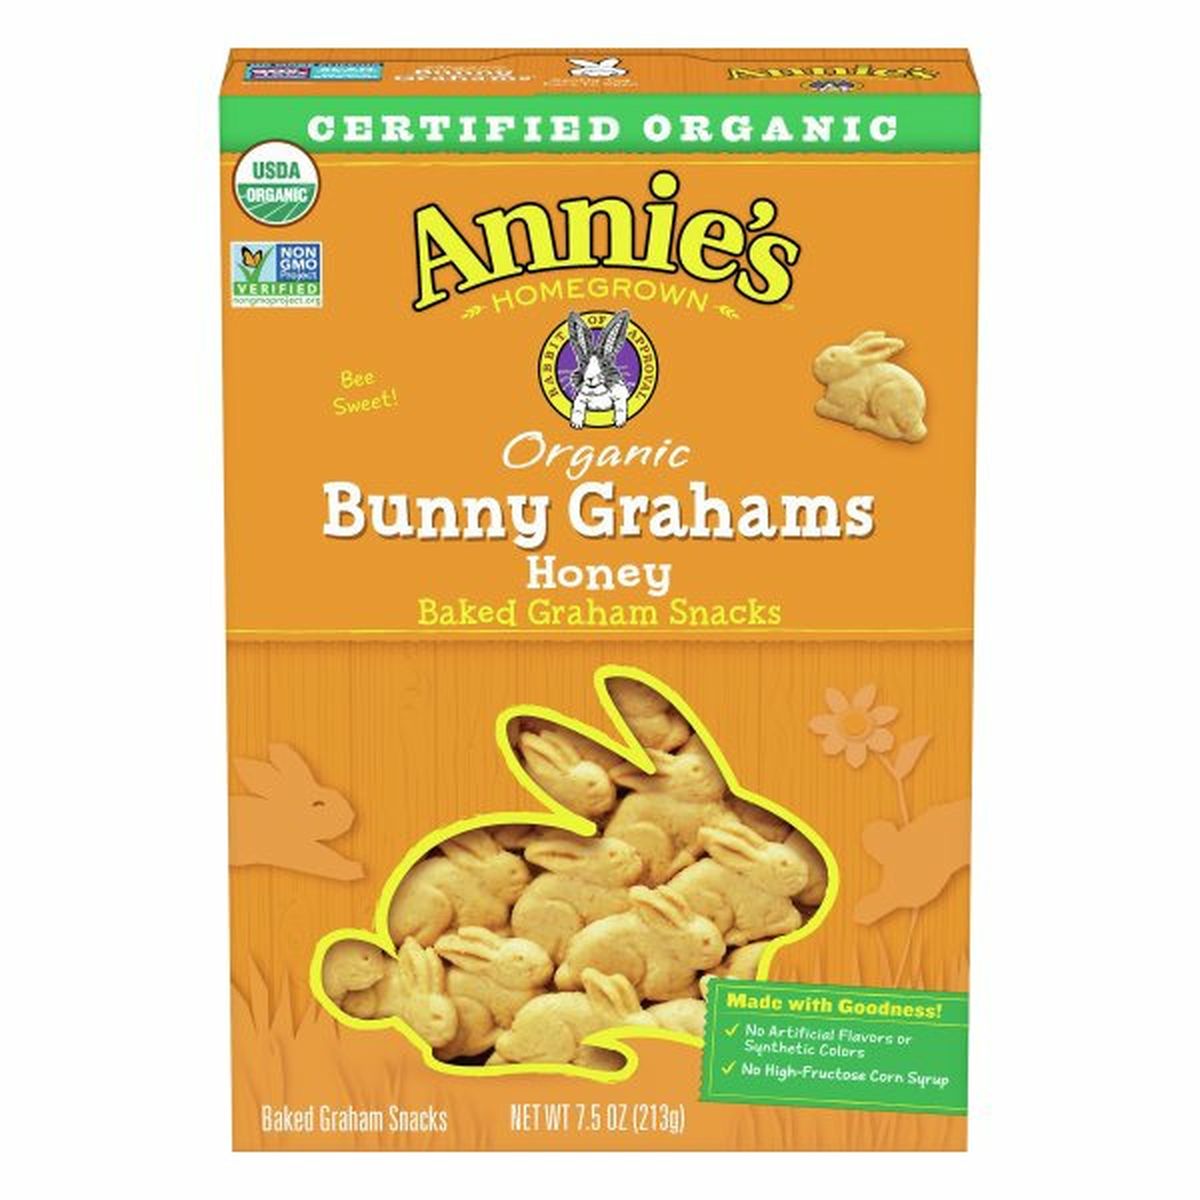 Calories in Annie's Bunny Grahams, Organic, Honey